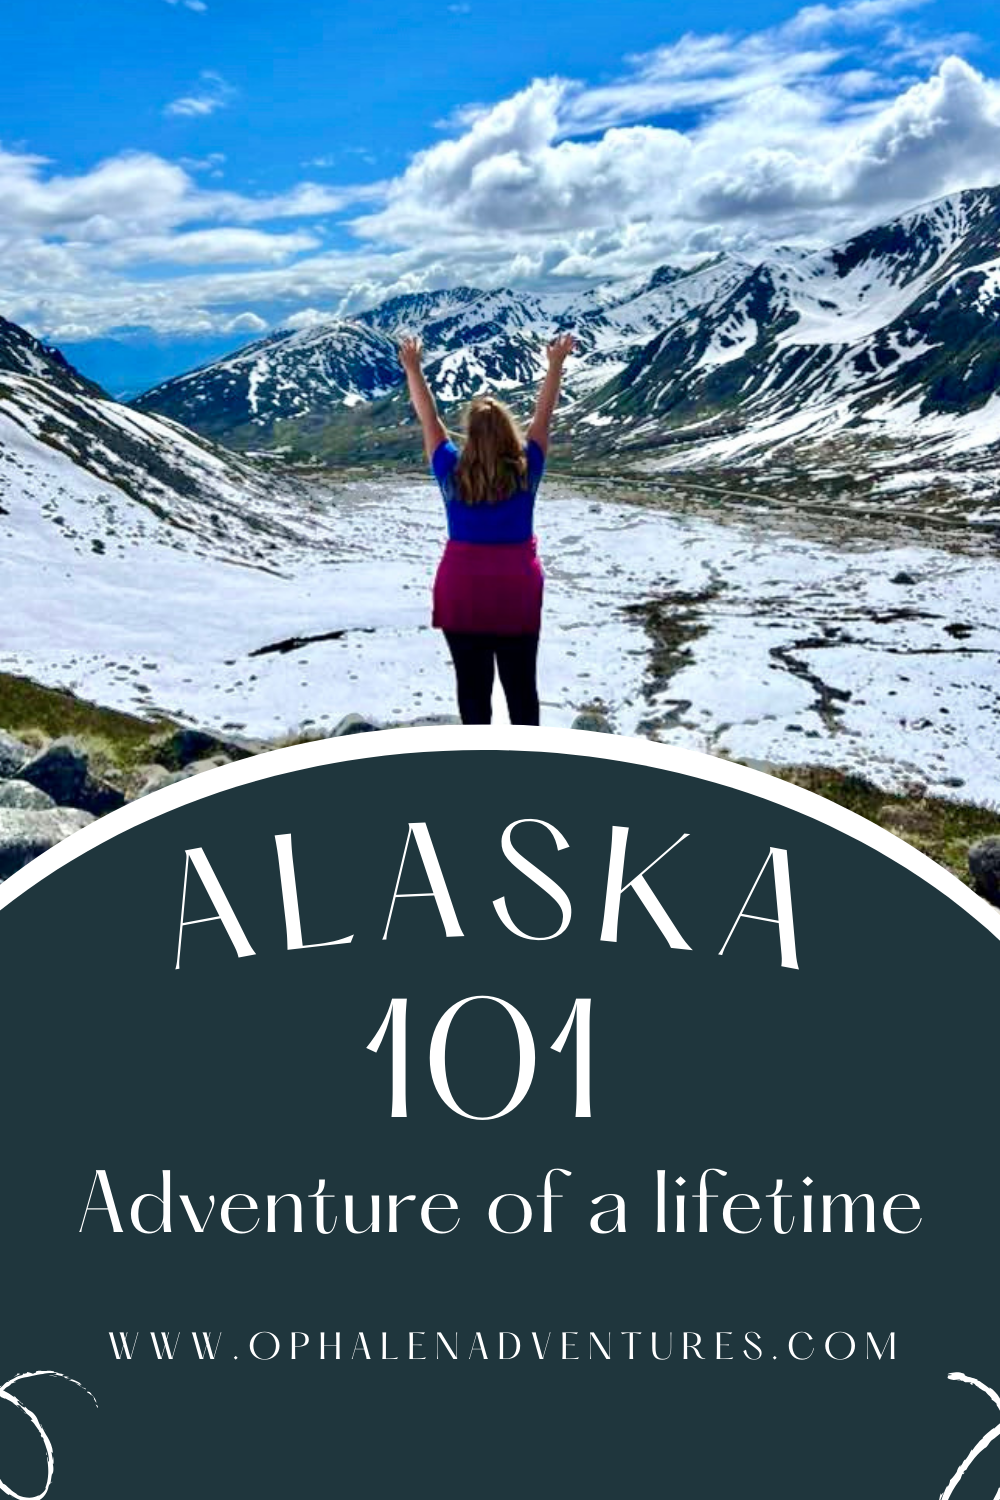 Alaska 101: RV Adventure of a Lifetime Starts Here!